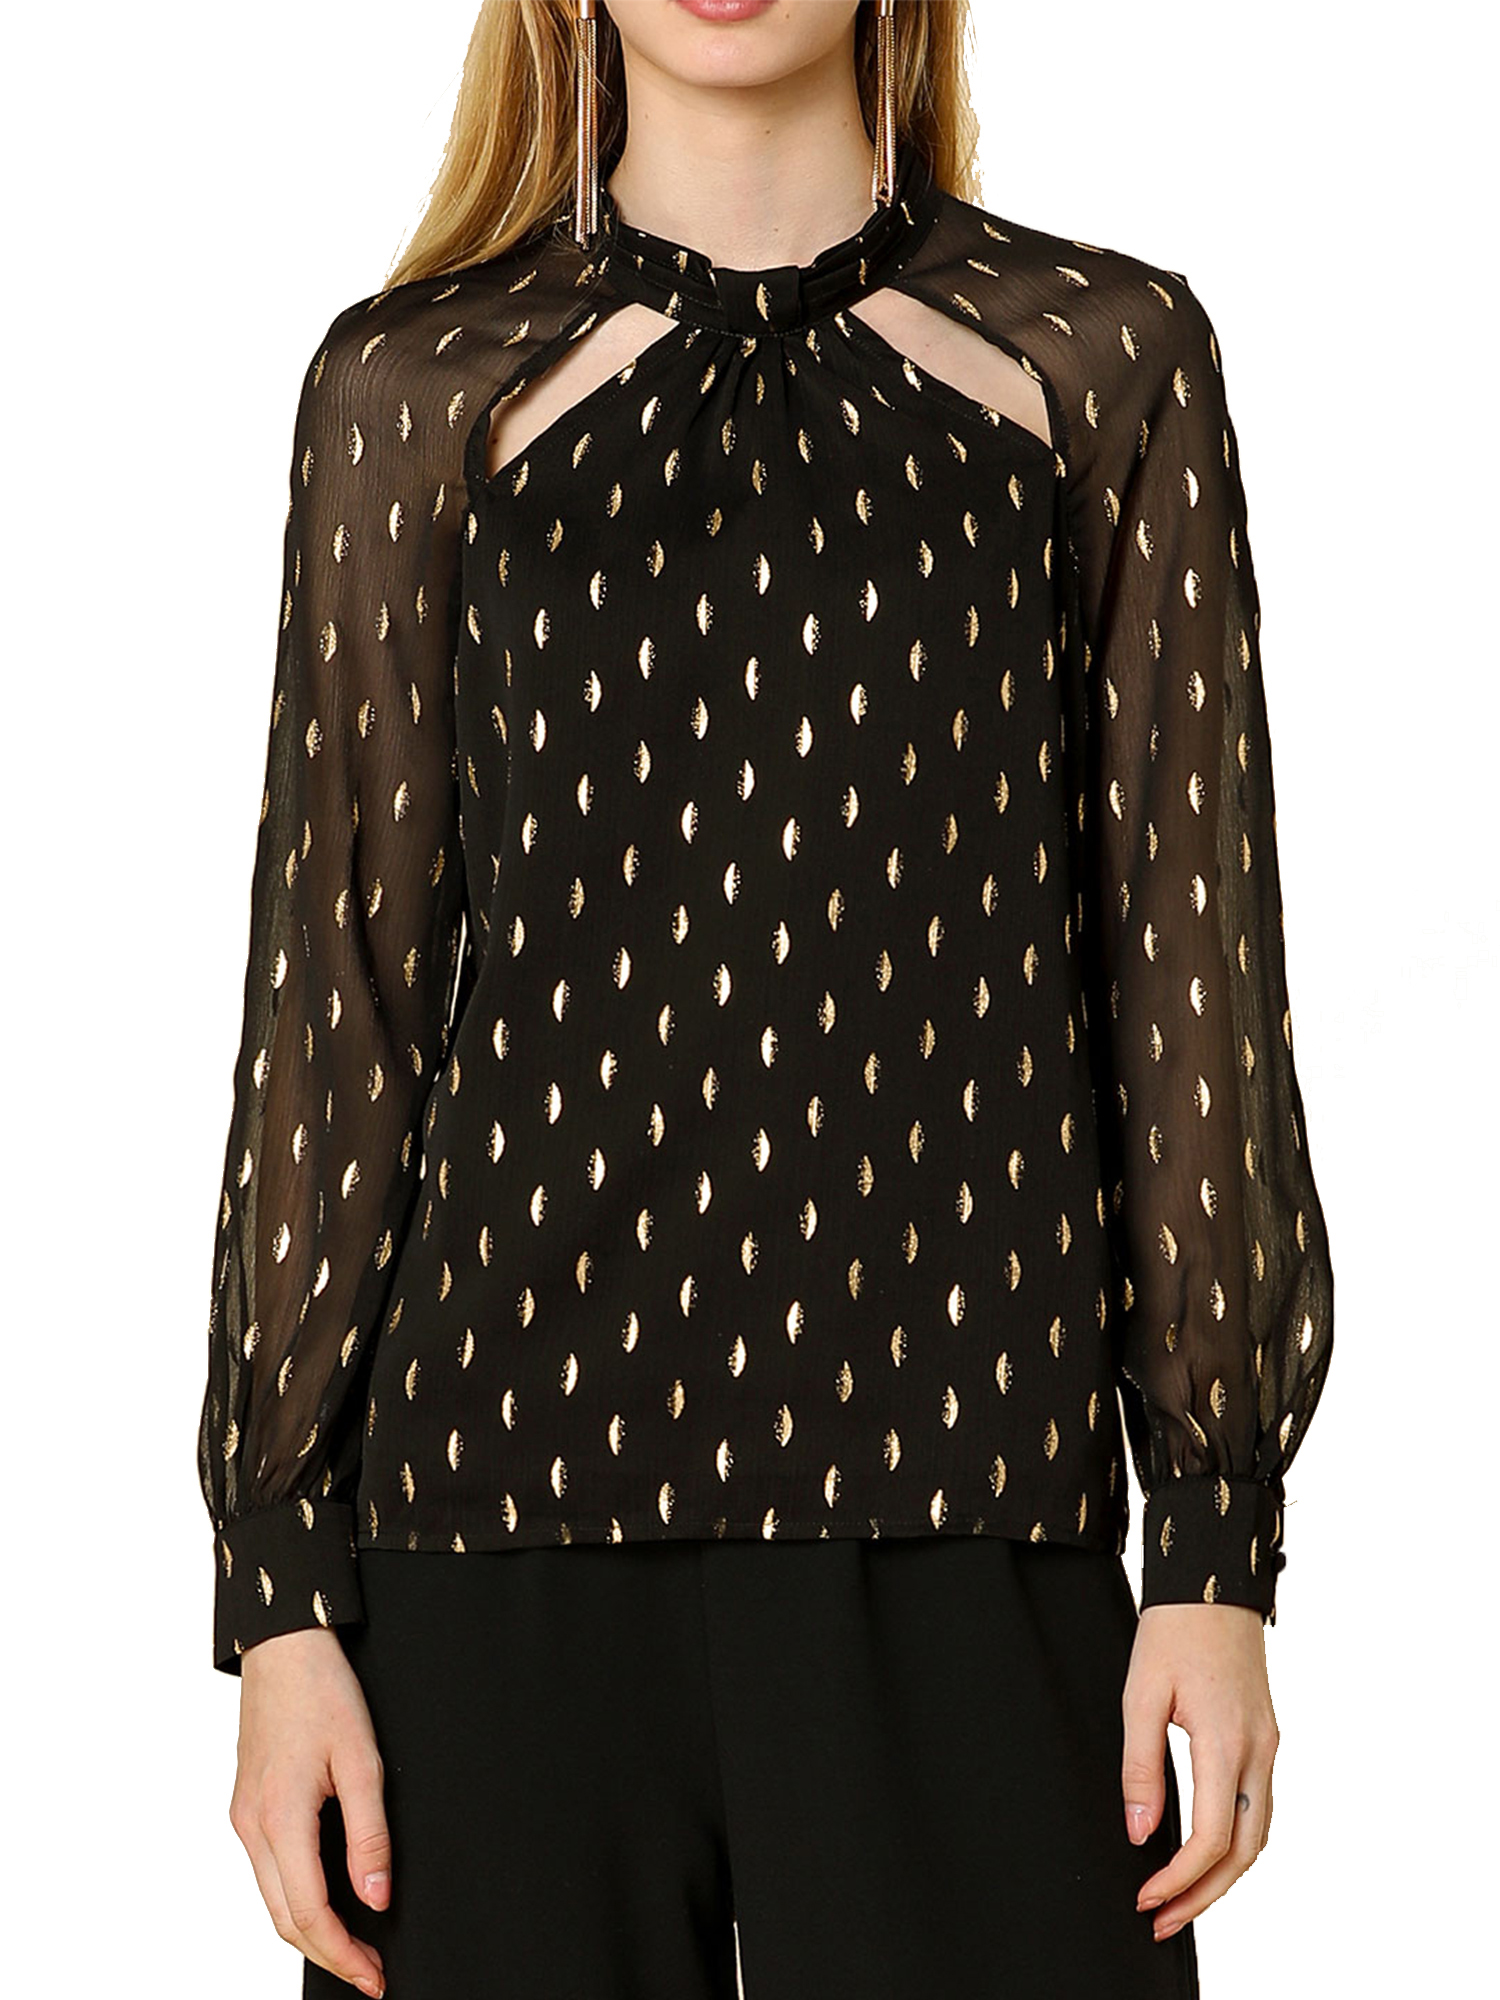 Unique Bargains Women's Cut Out Stand Collar Metallic Dots Blouses Chiffon Shirt Top - image 5 of 7